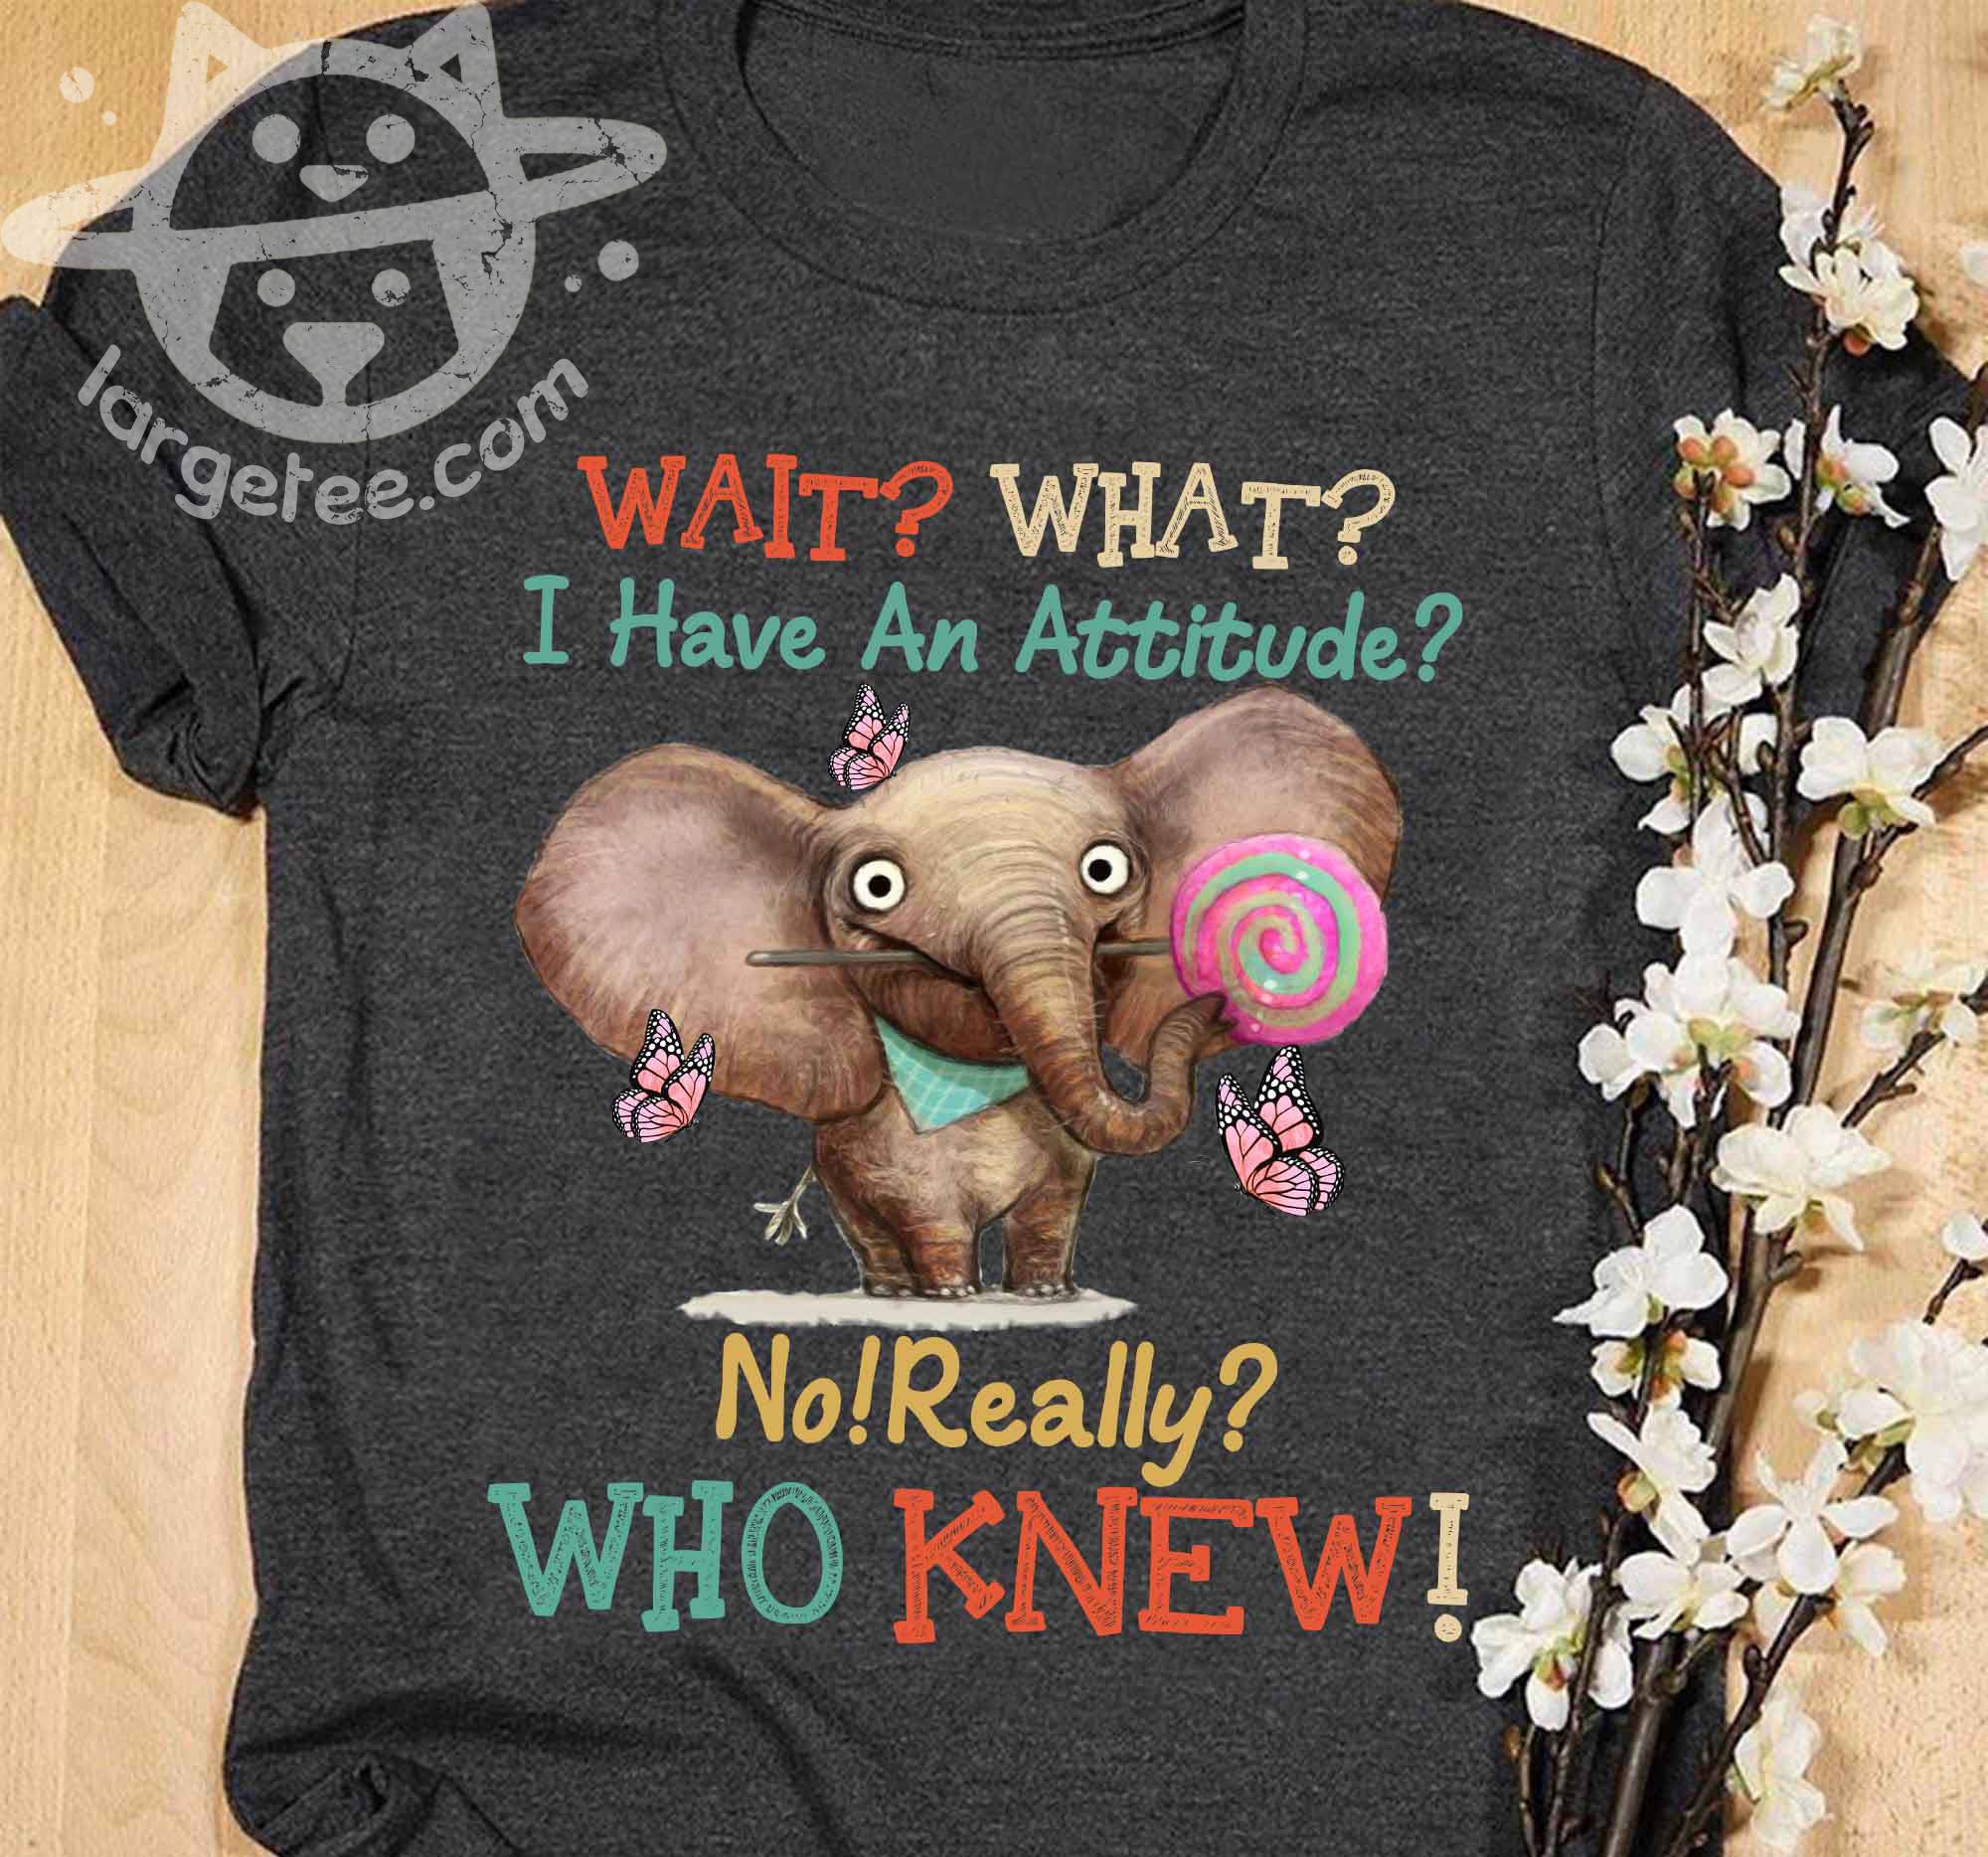 Wait what I have an attitude - Elephant's attitude